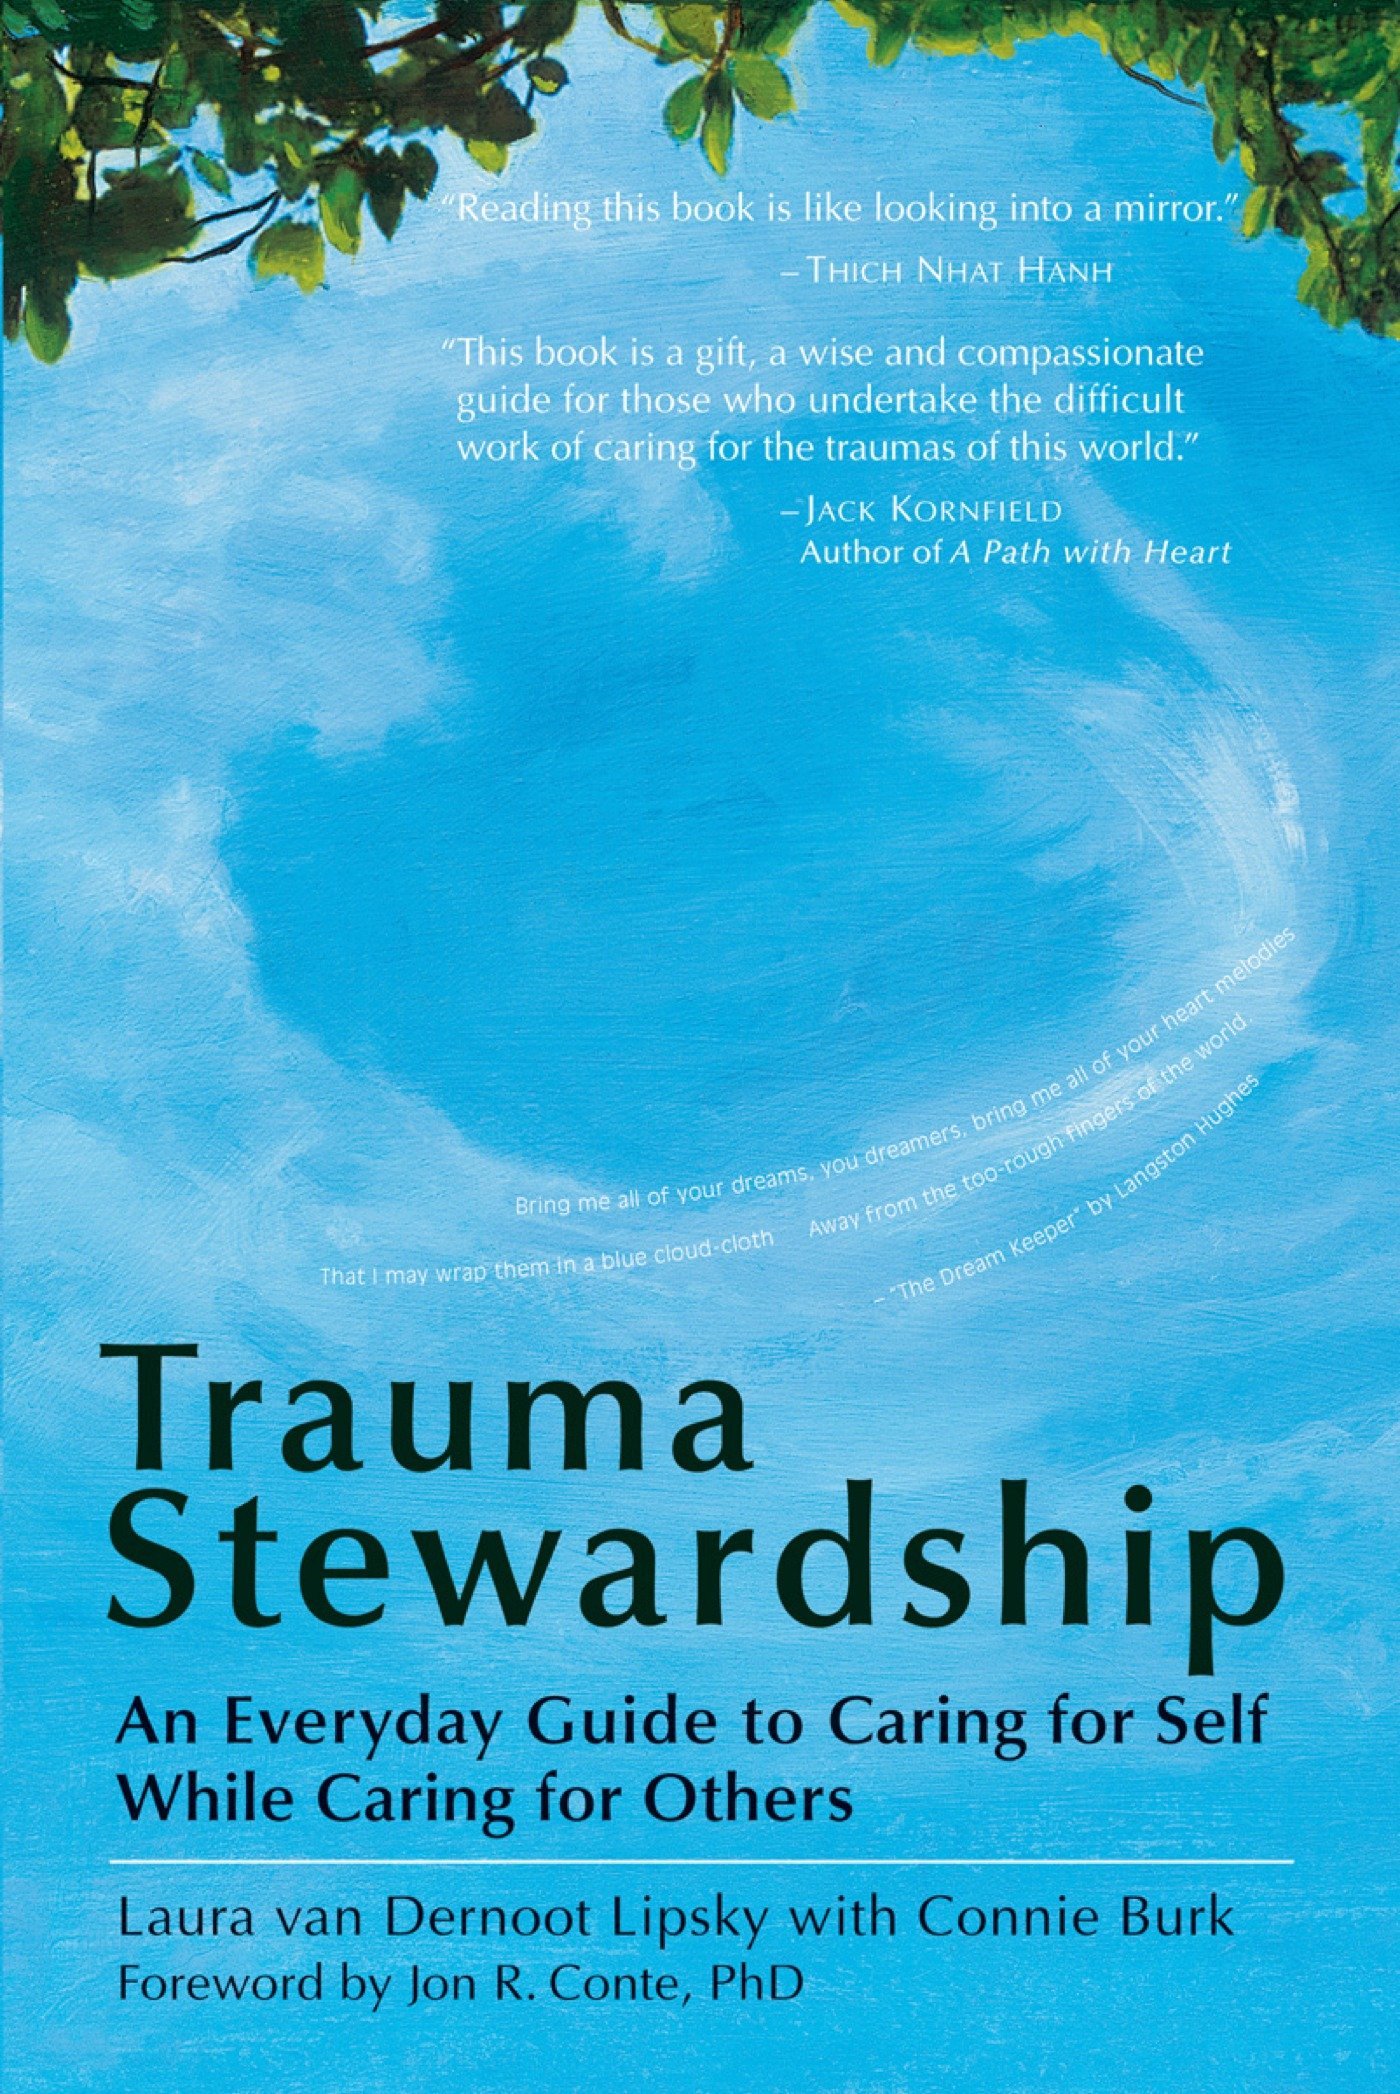 Trauma Stewardship Book Cover.jpg